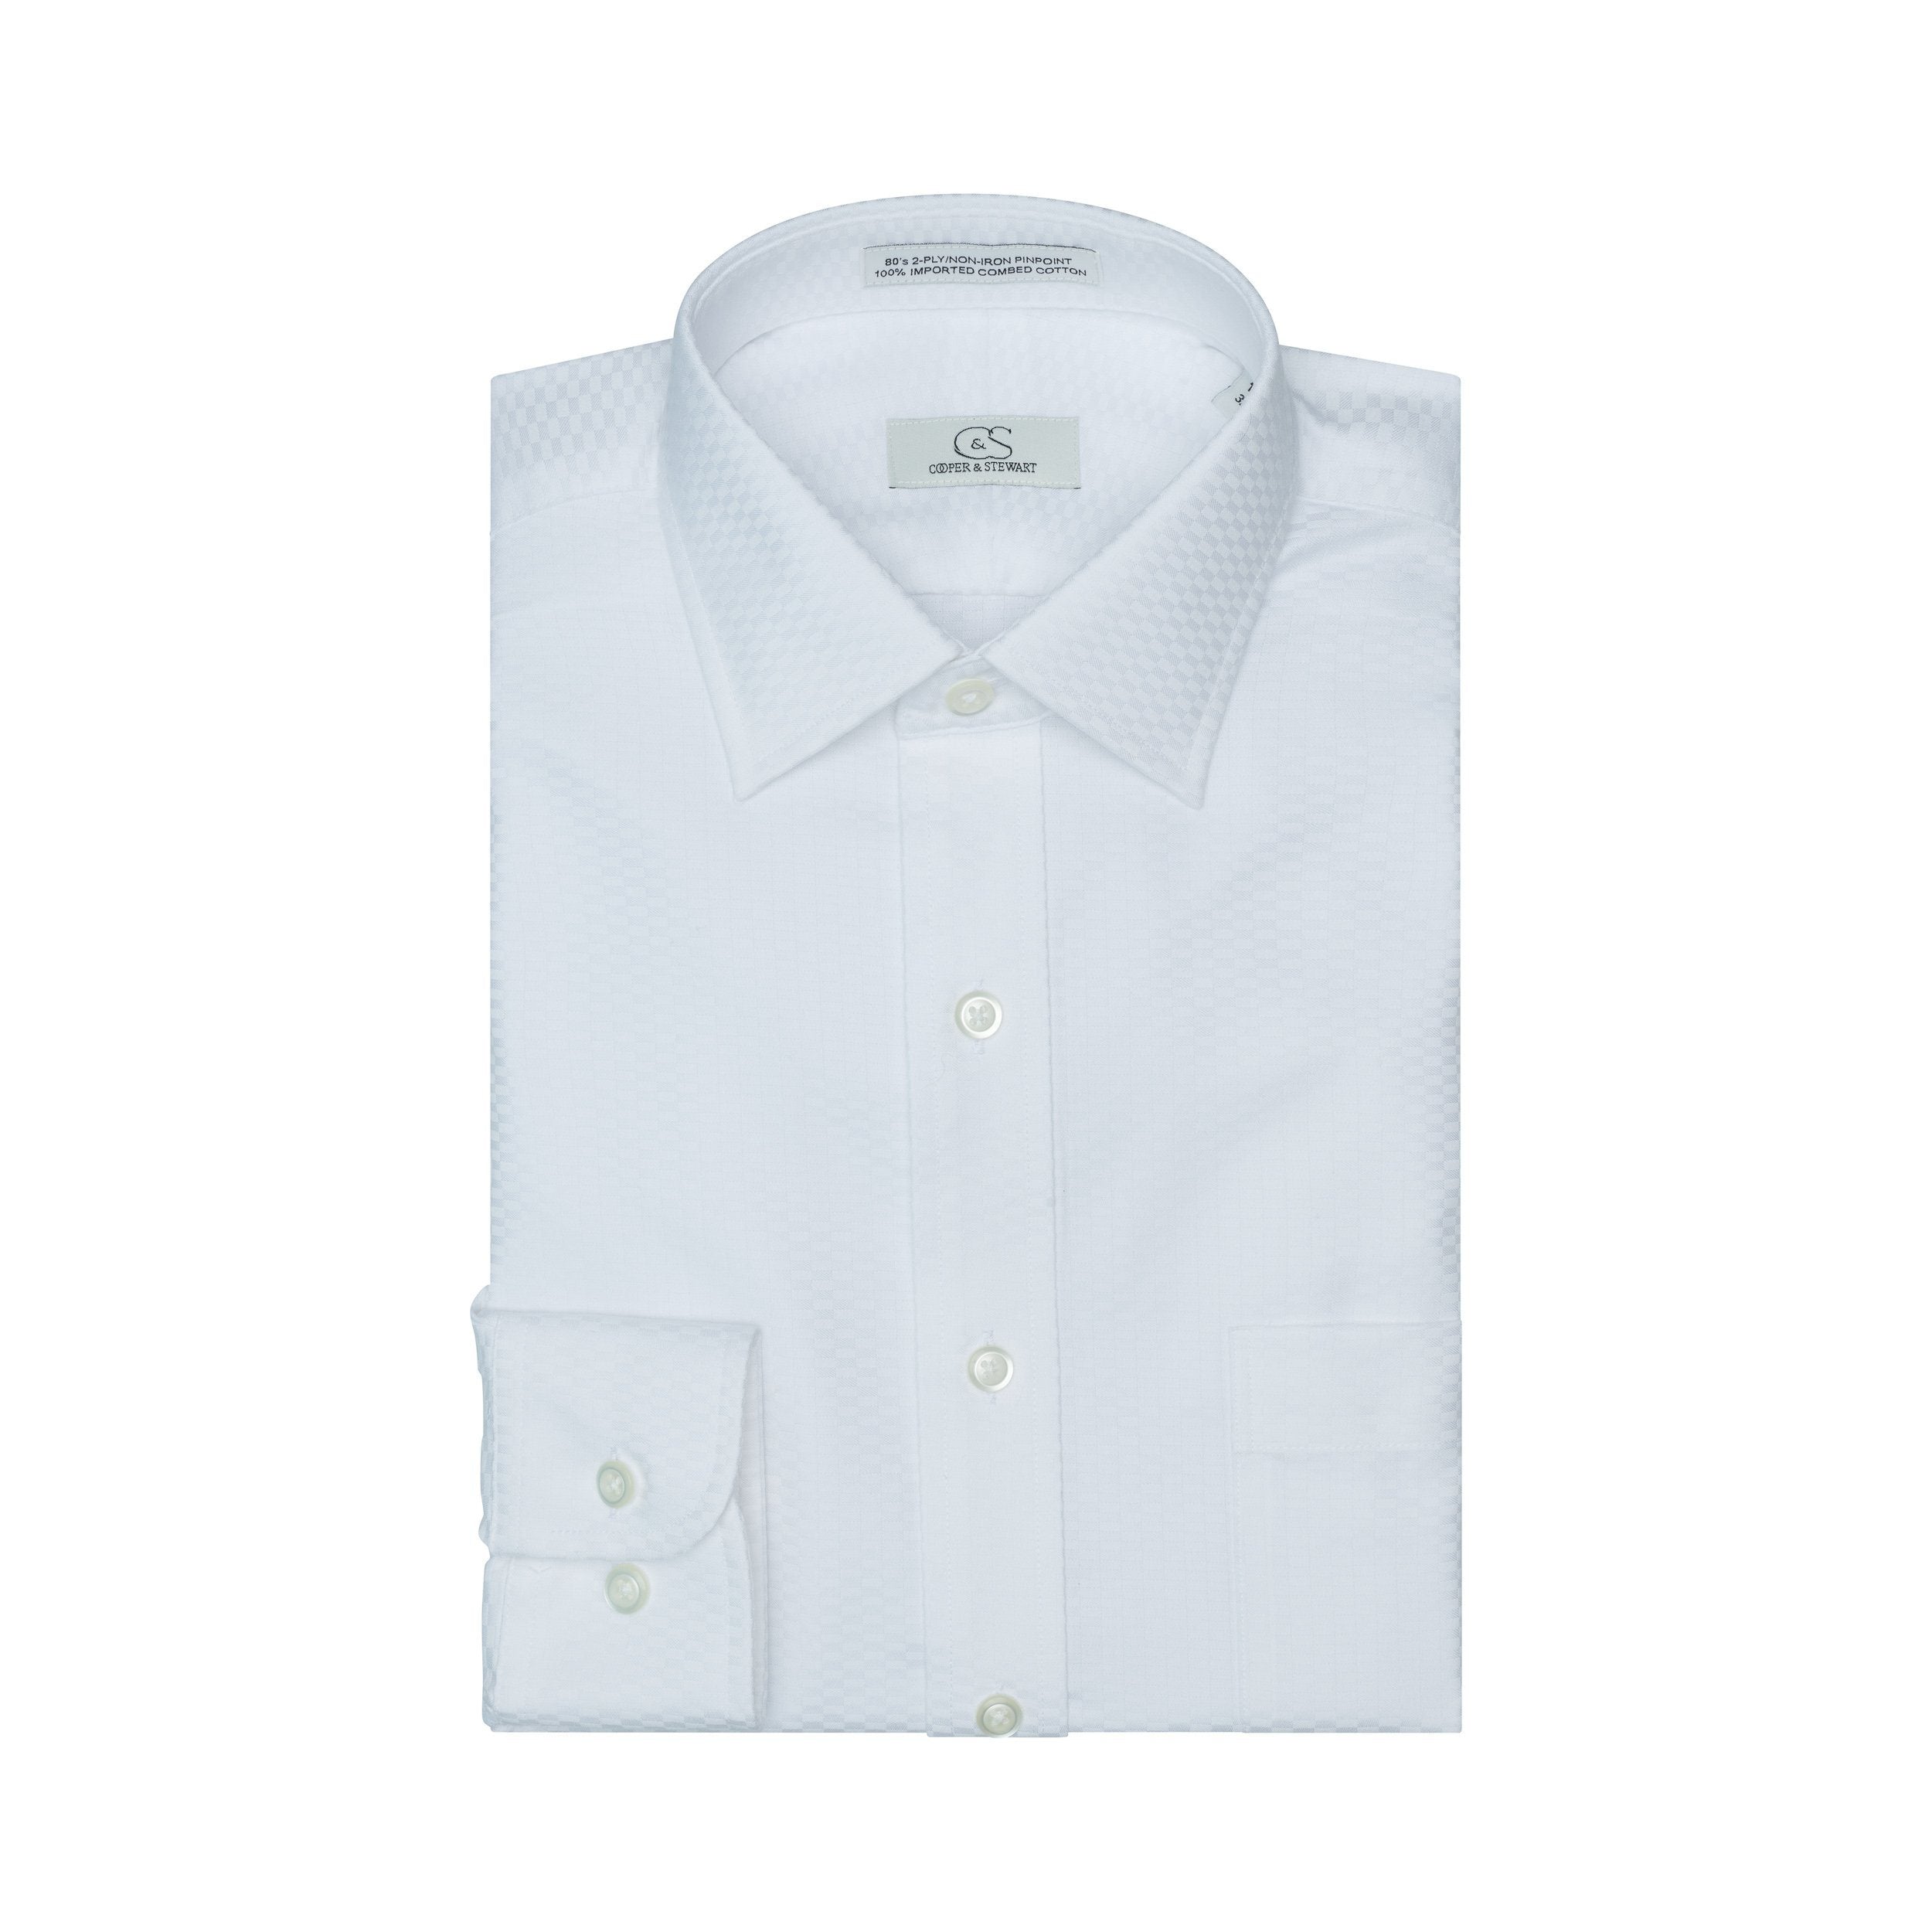 043 - White Tonal Check SC TF Dress Shirt Best Dress Shirt 